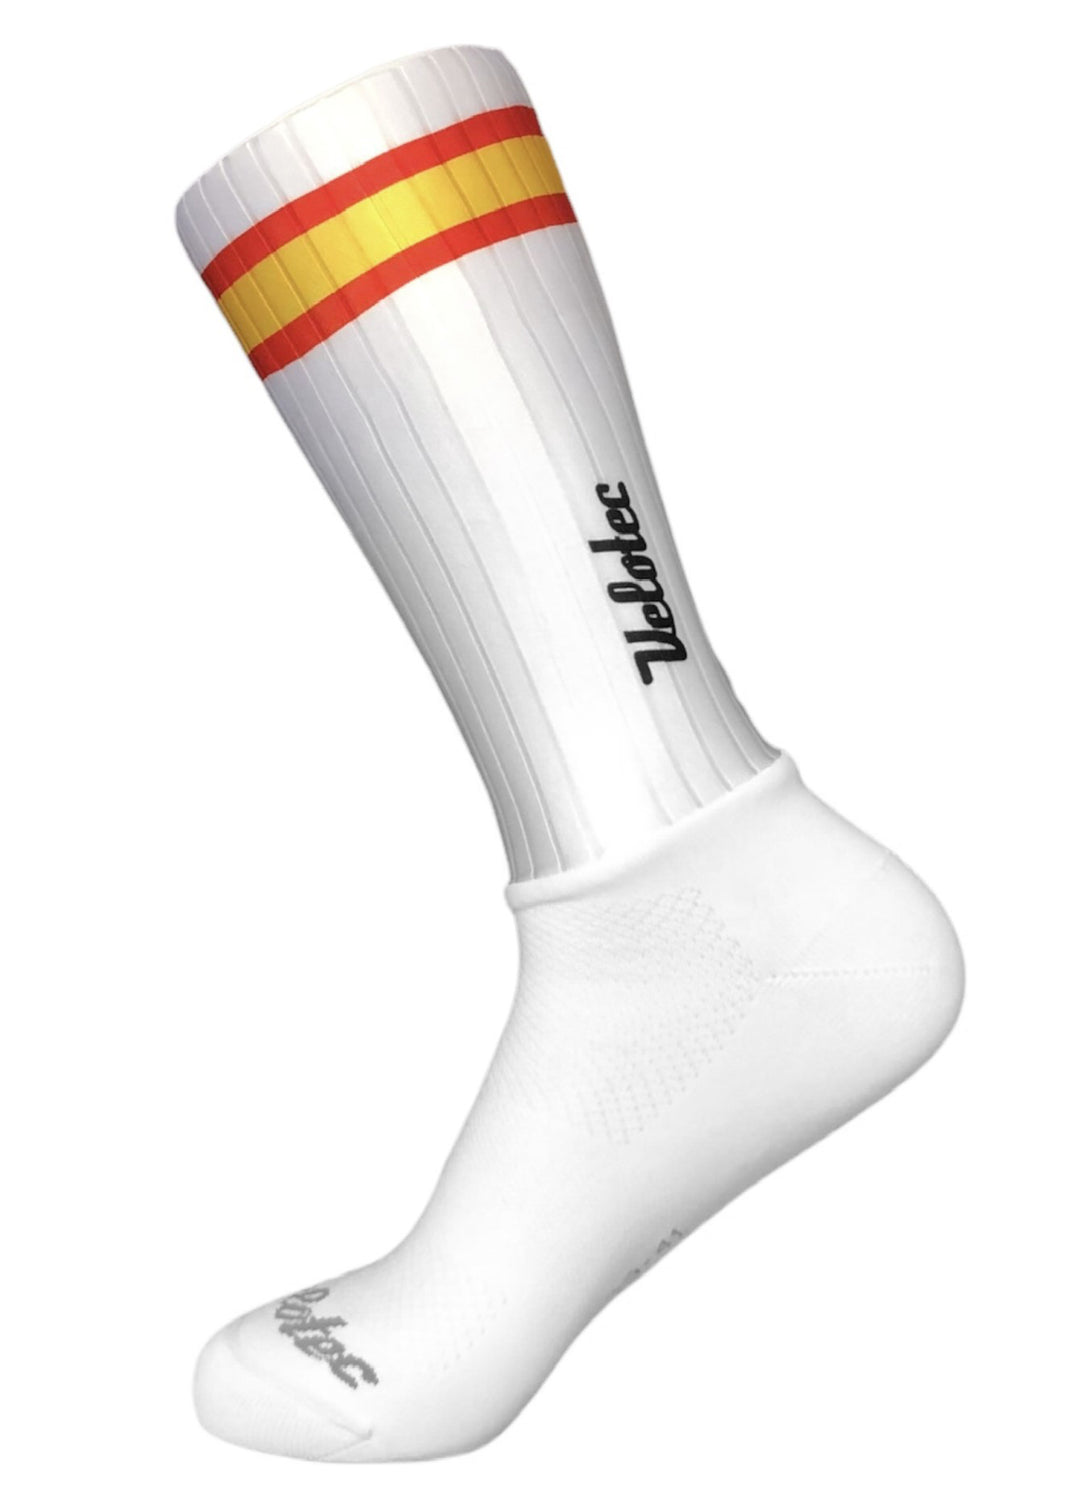 Aero-socks 2.0 Espana